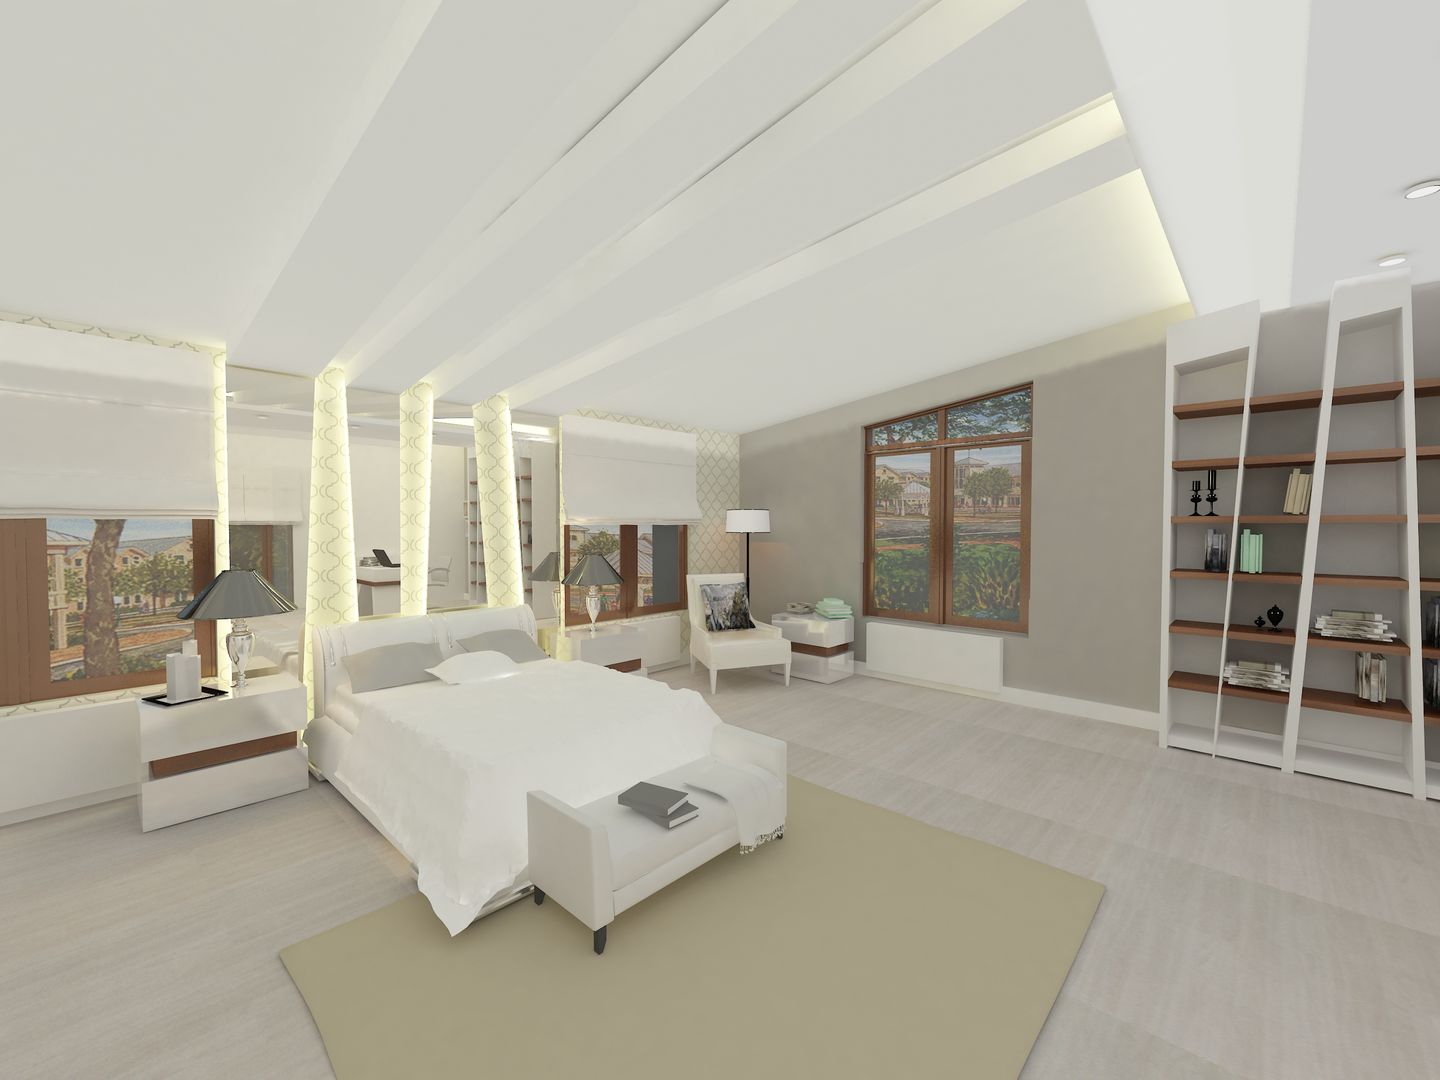 Batı Villaları, Arı Villası, İç Mimar ve Çevre Tasarımcısı İç Mimar ve Çevre Tasarımcısı Minimalist bedroom